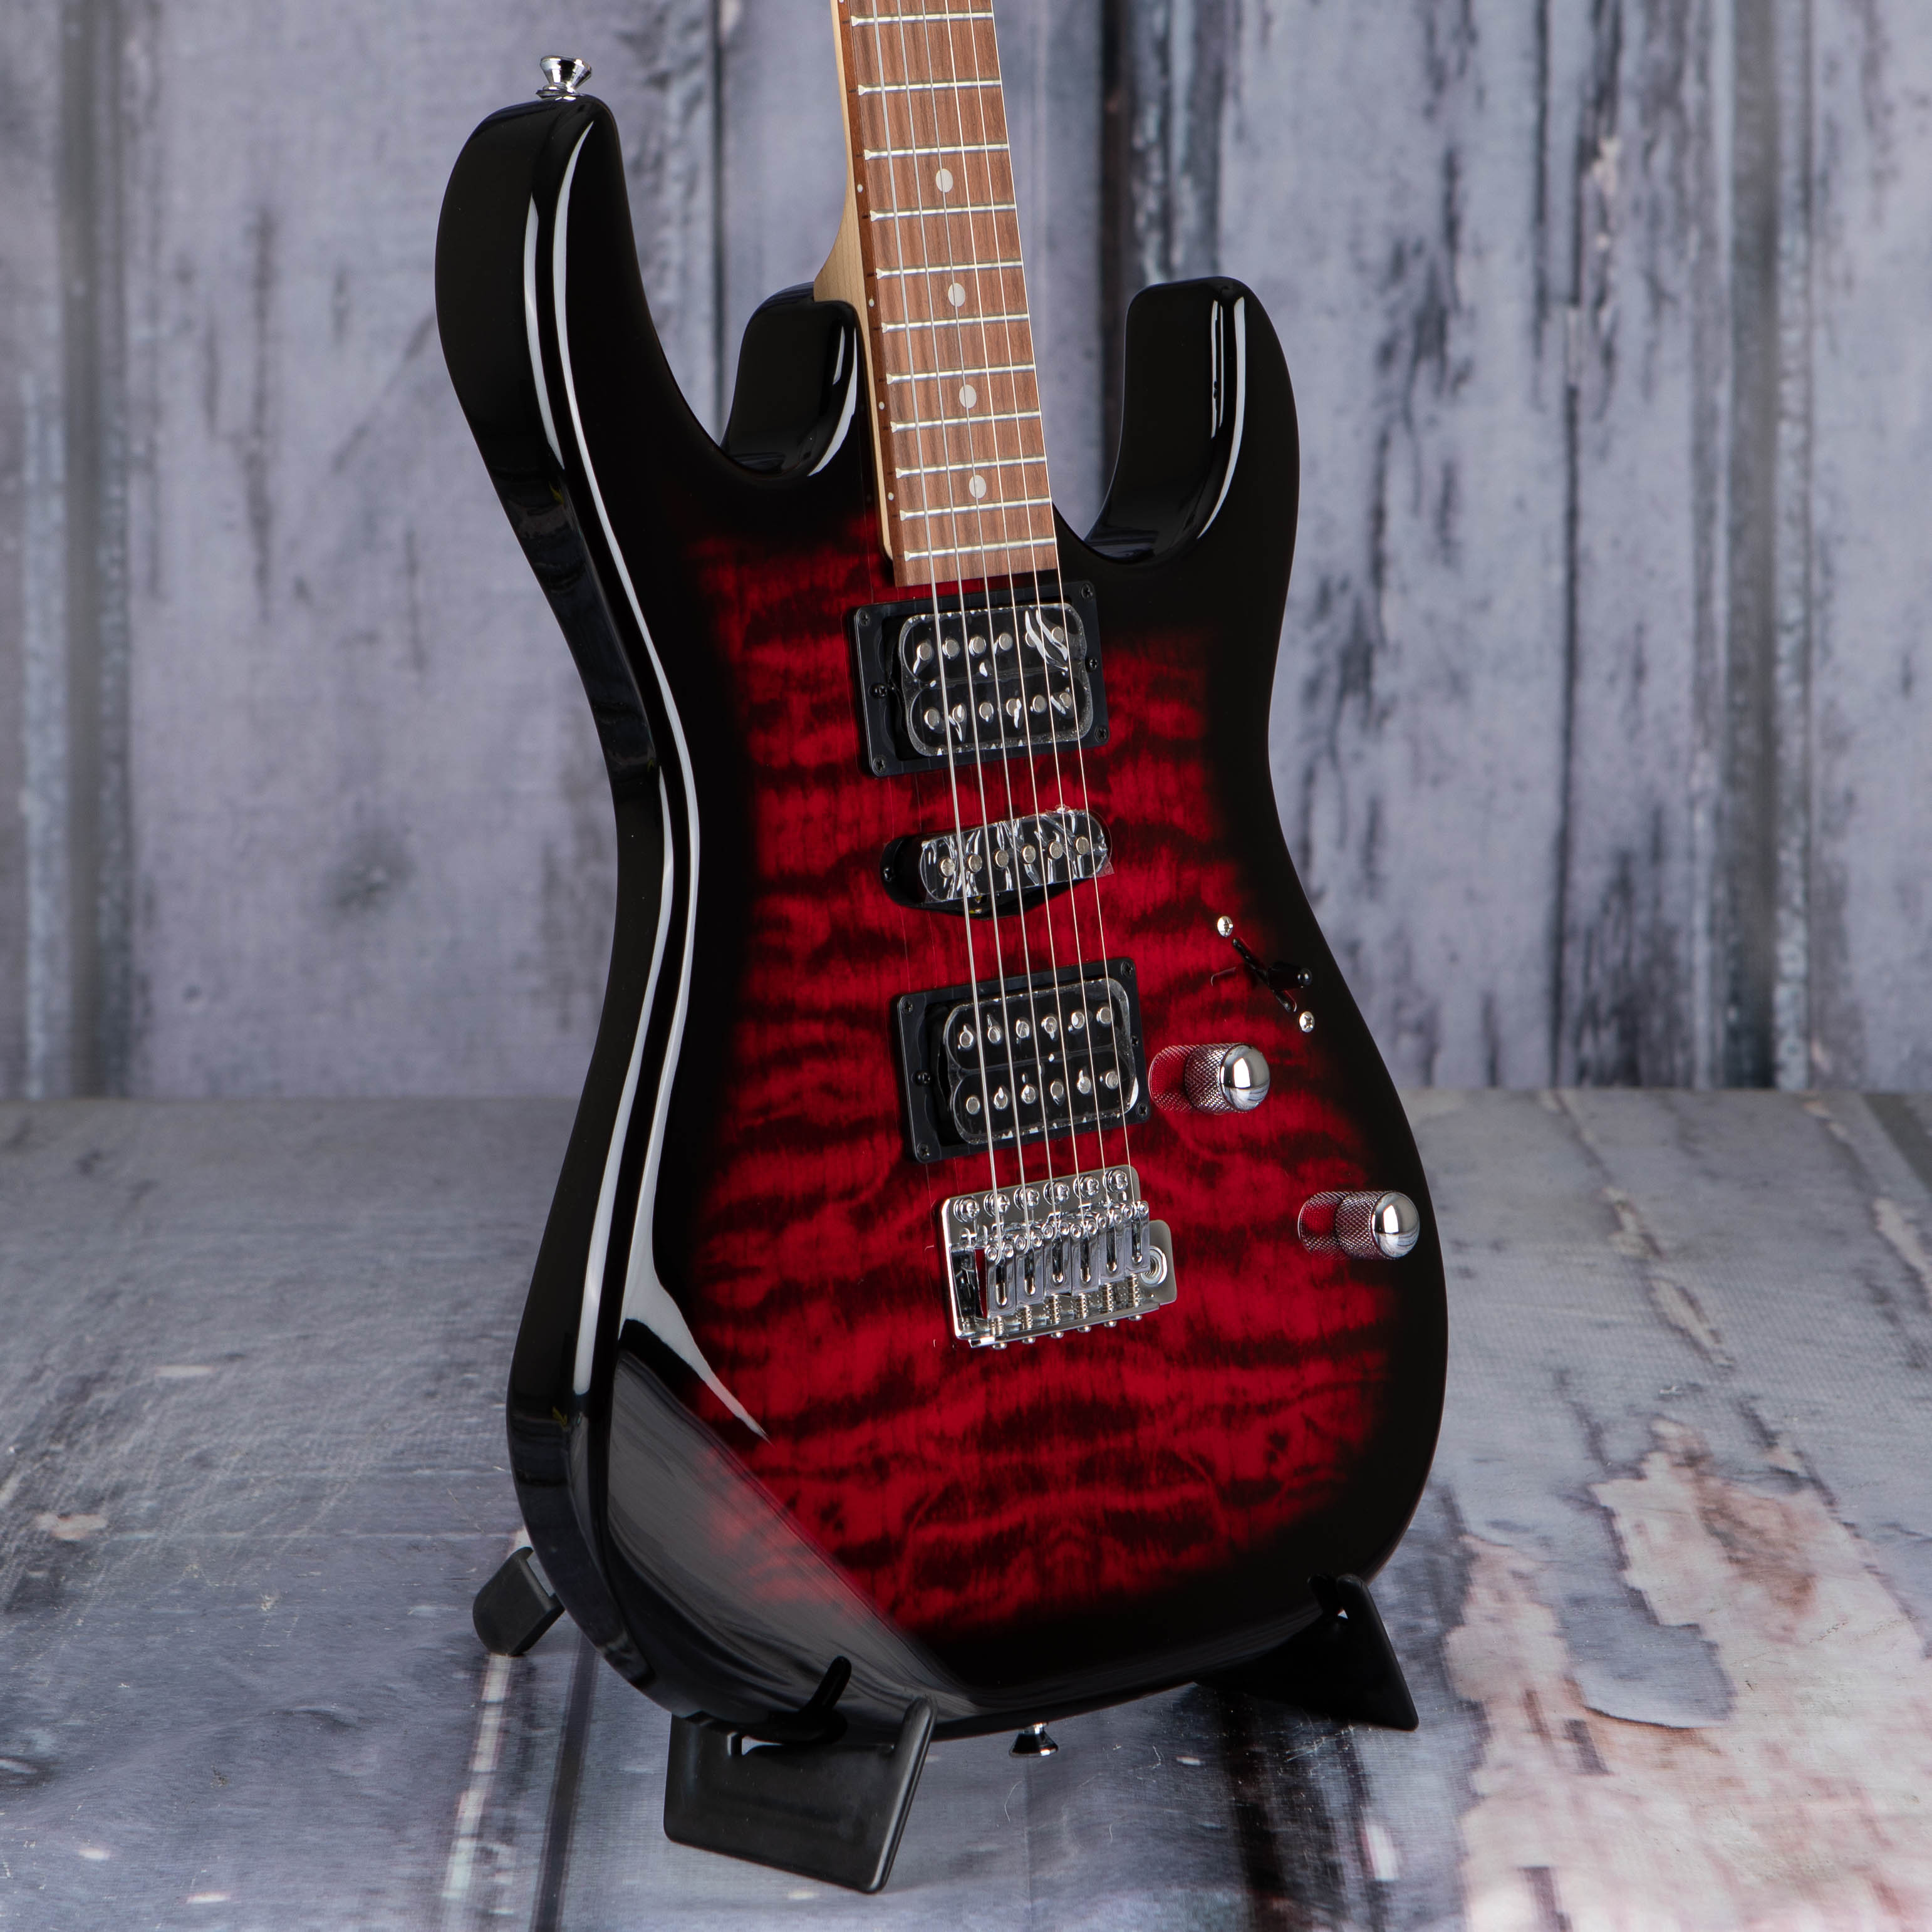 Ibanez Gio GRX70QA Electric Guitar, Transparent Red Burst, angle